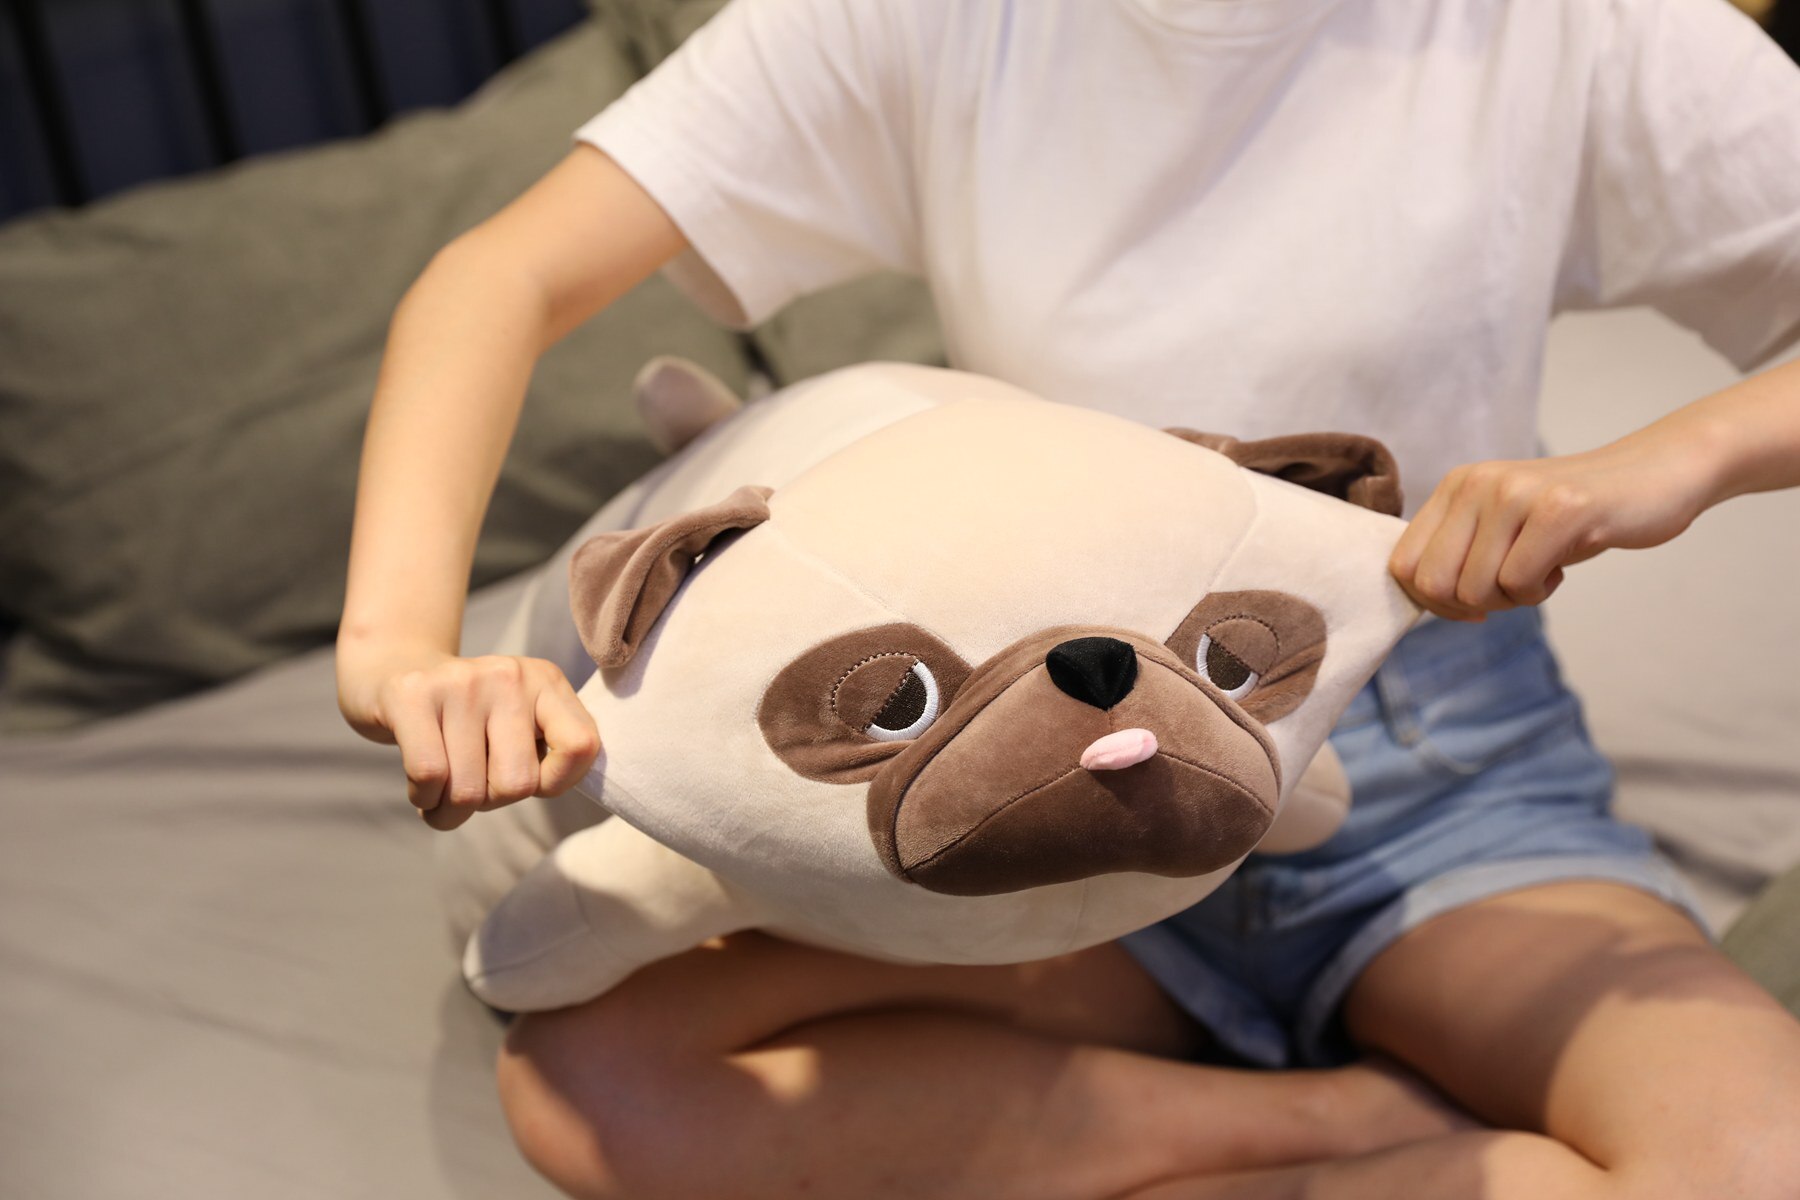 plush Pug toy stuffed plush animal Shar Pei soft doll dog plush toy pillow kids toys birthday gift for girlfriend